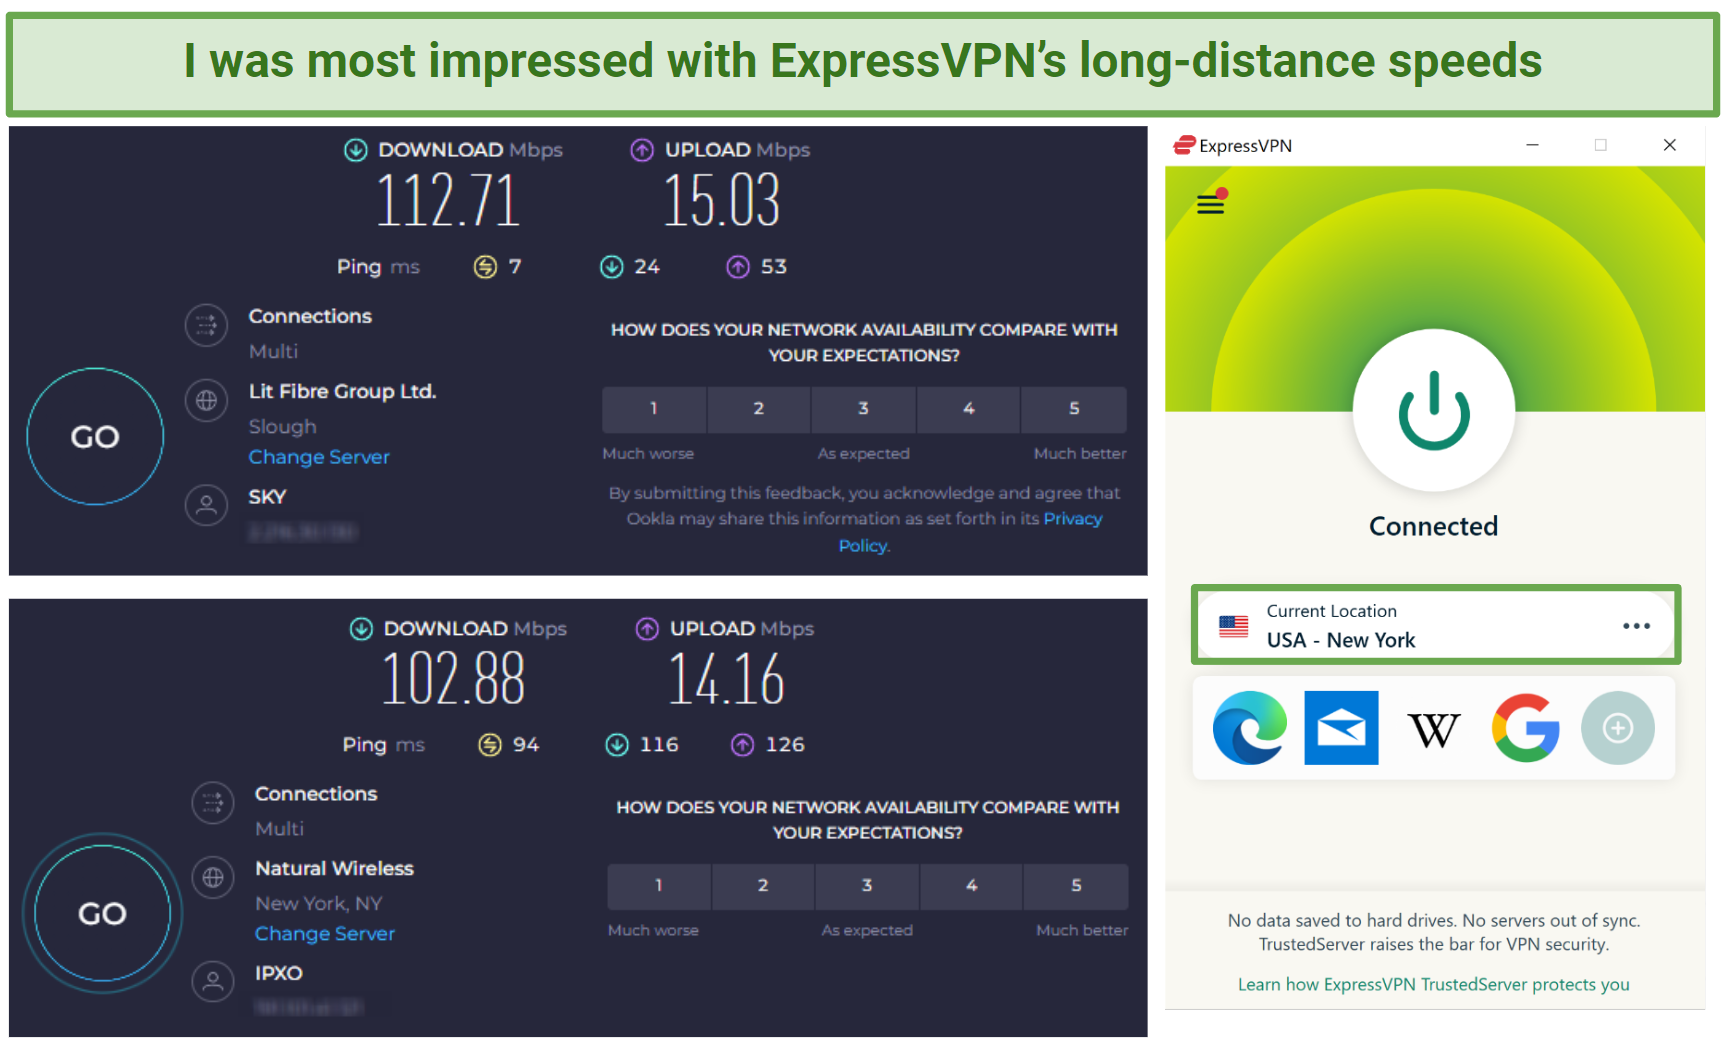 Screenshot of ExpressVPN speed test results on long-distance servers